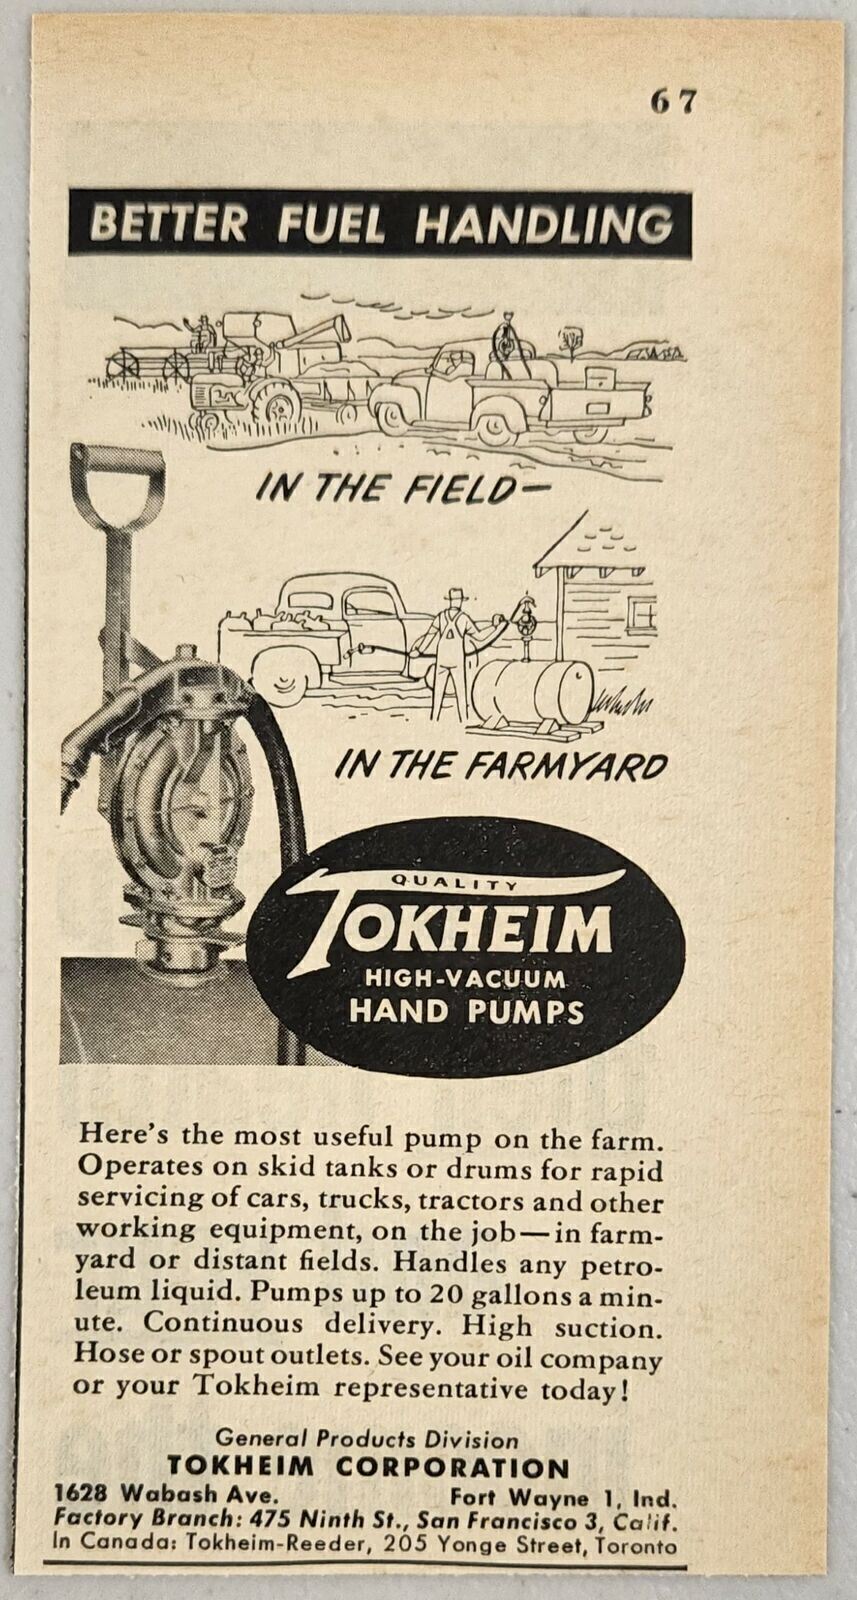 1958 Print Ad Tokheim High-Vacuum Hand Pumps For Farms Fort Wayne,IN